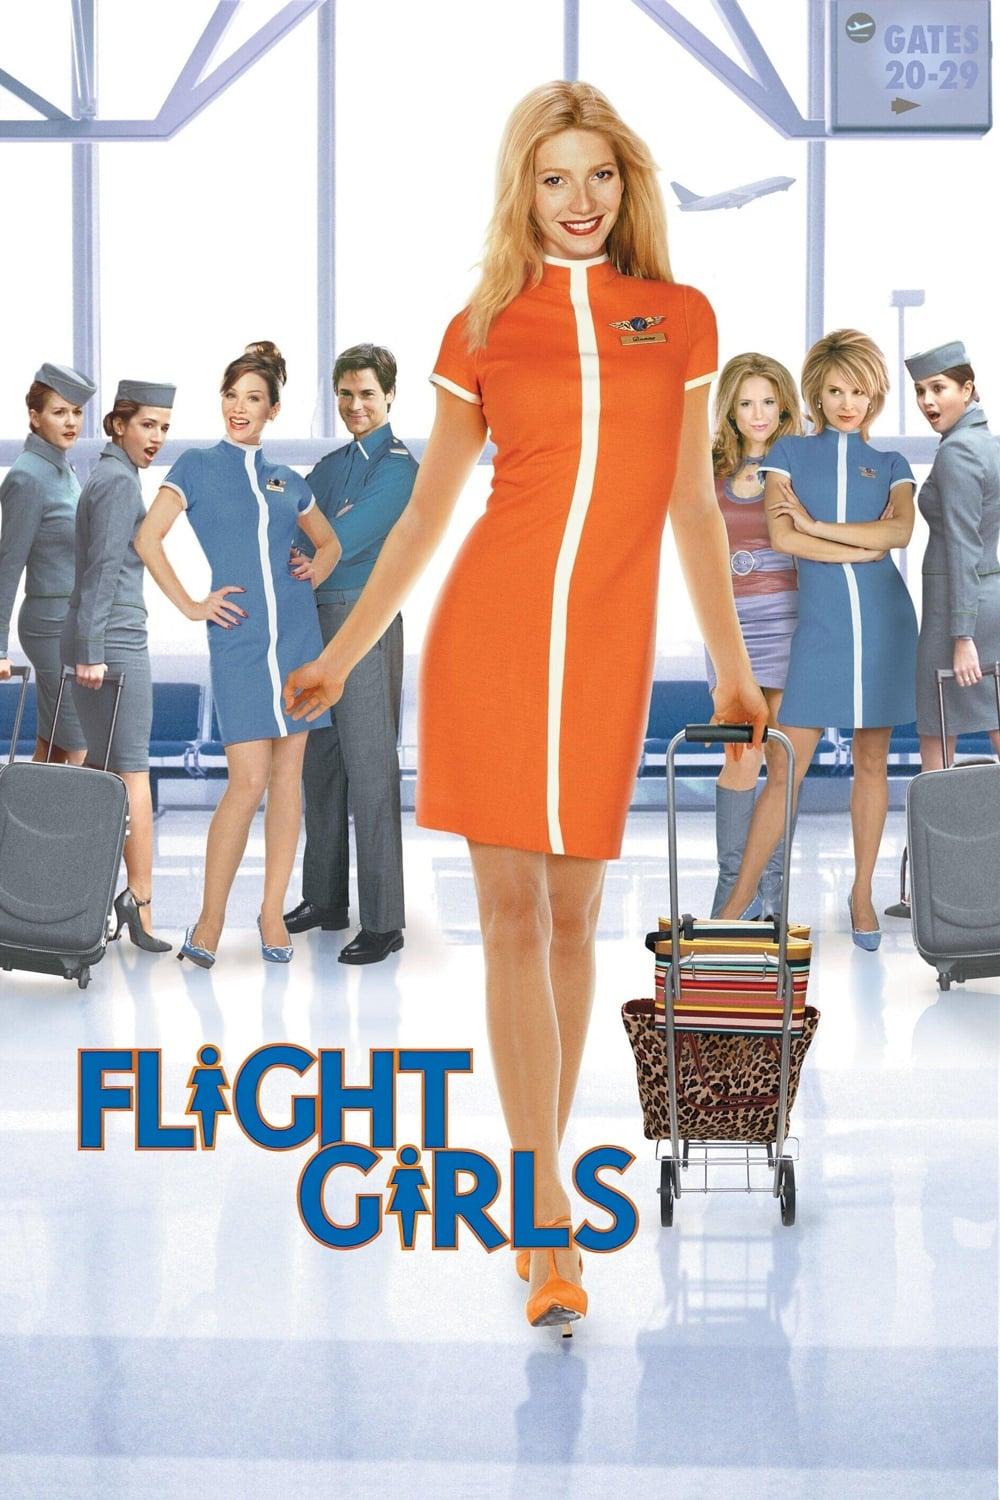 Flight Girls poster